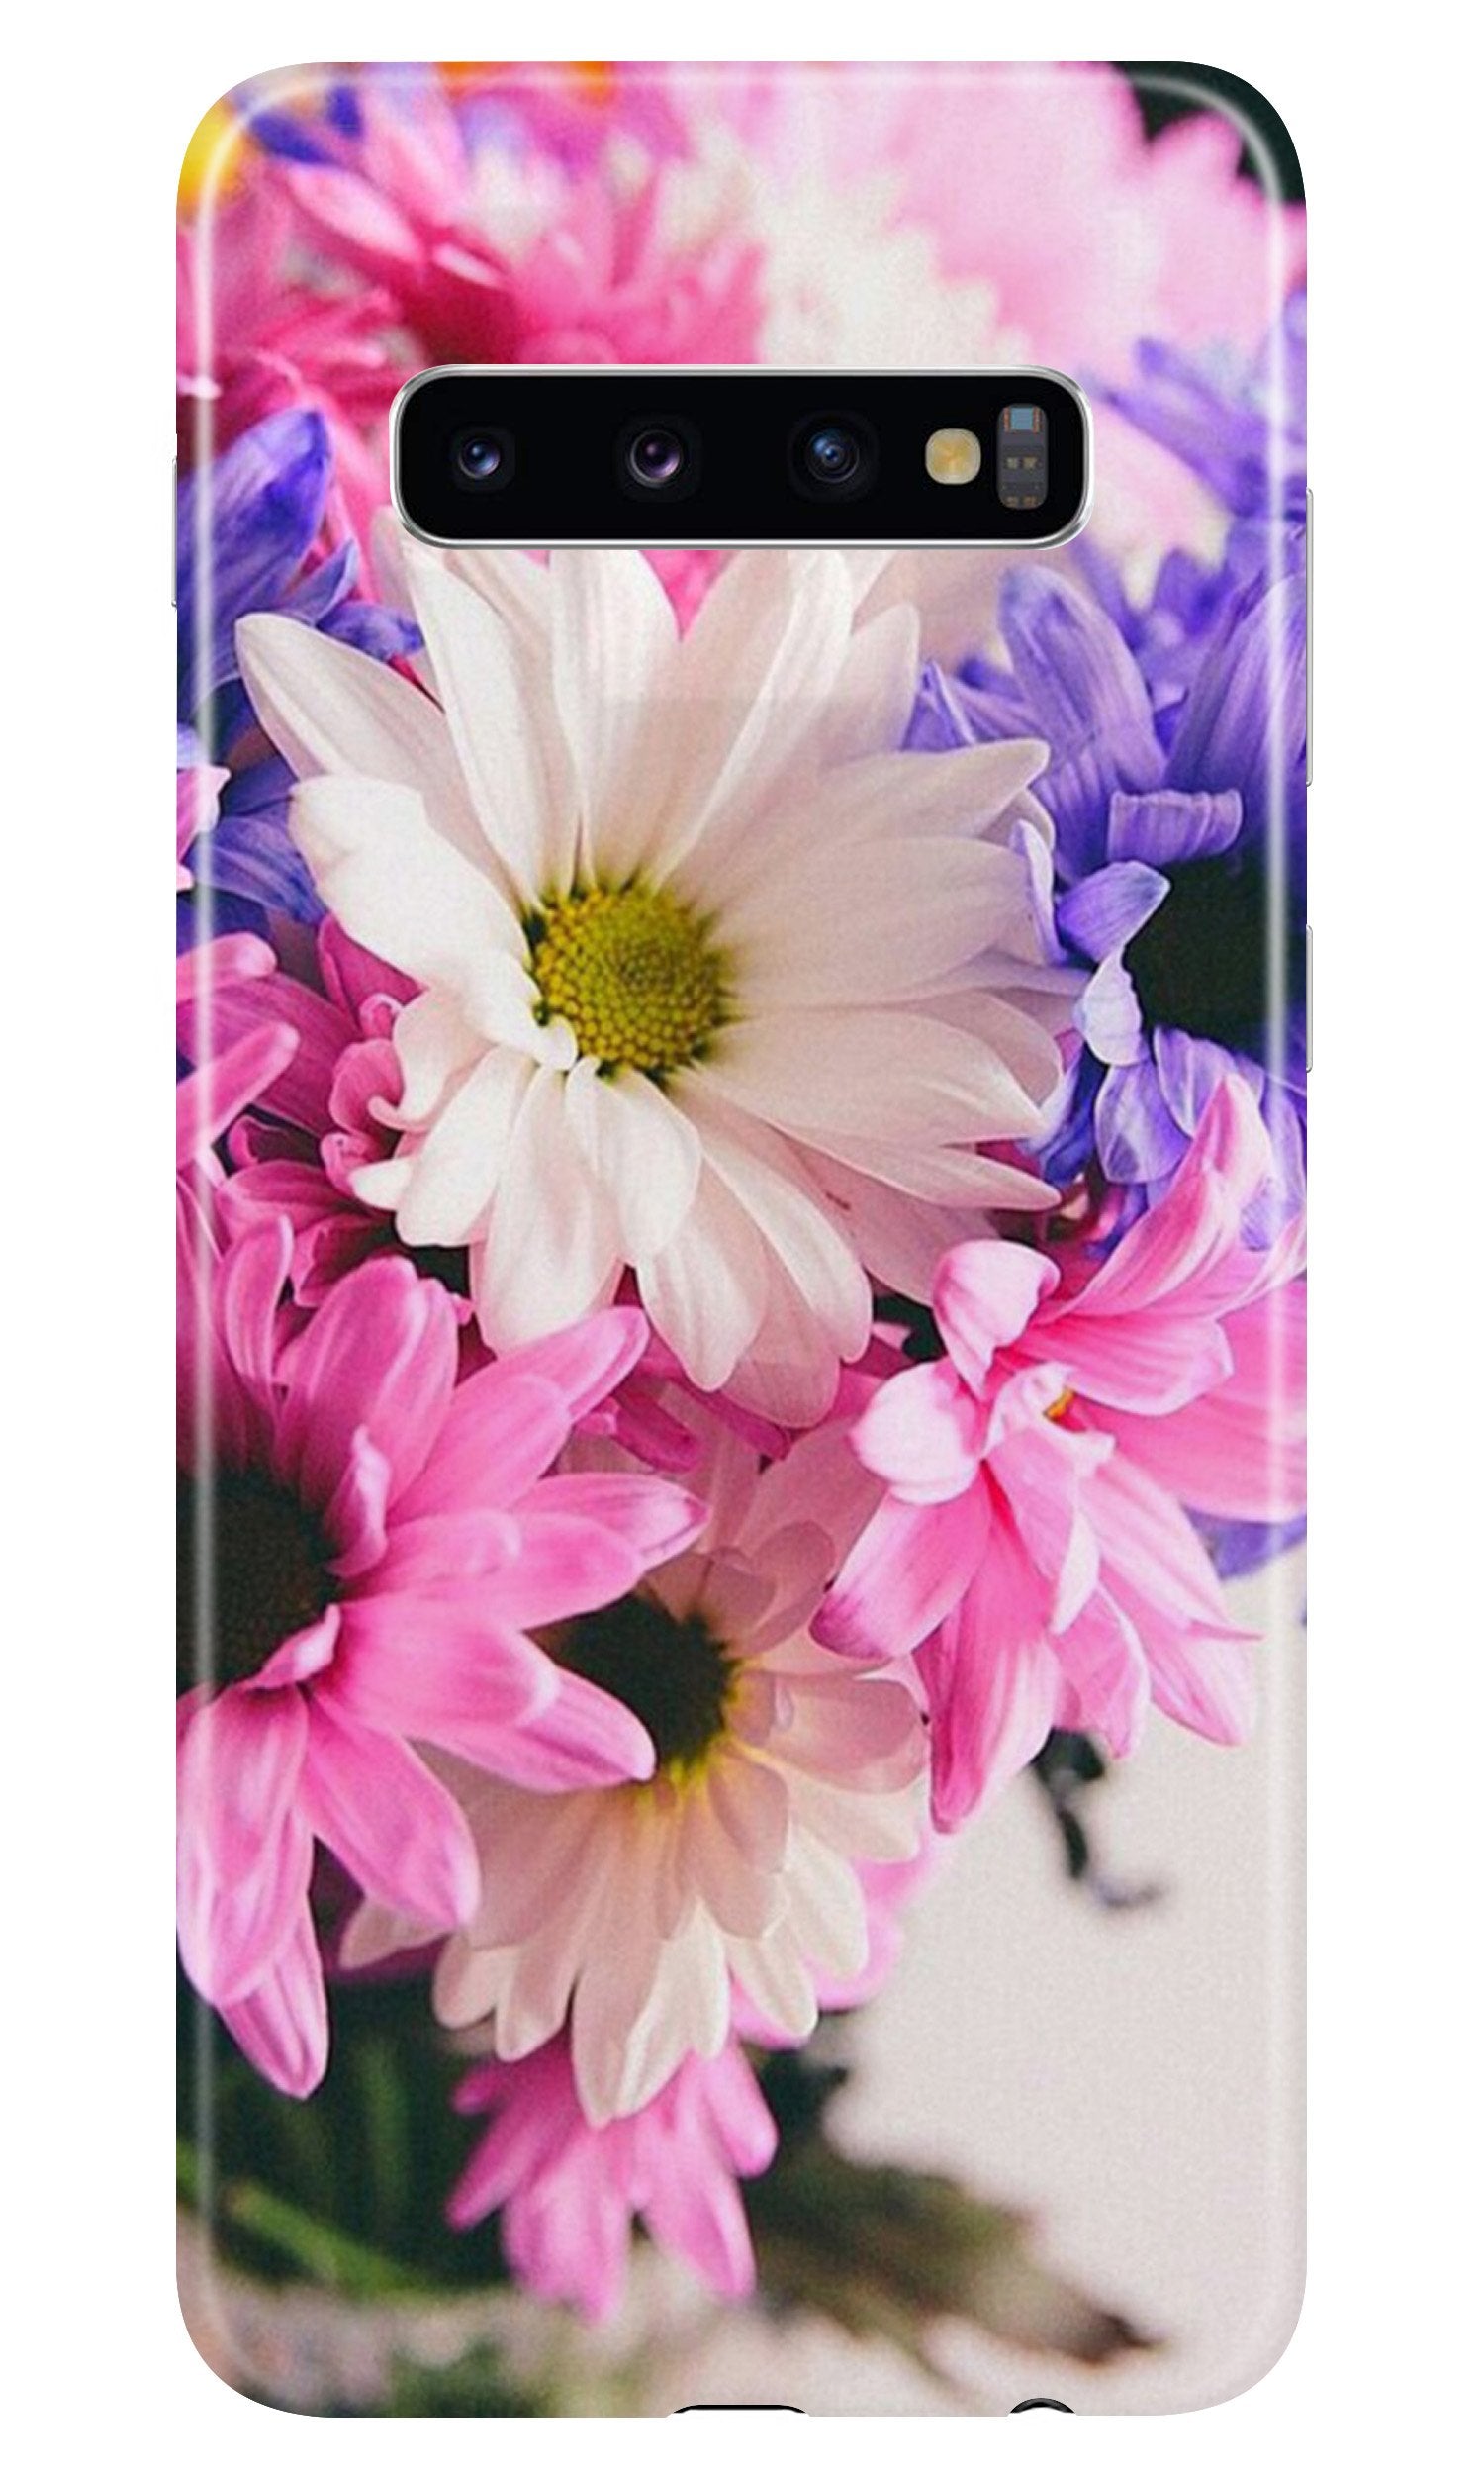 Coloful Daisy Case for Samsung Galaxy S10 Plus